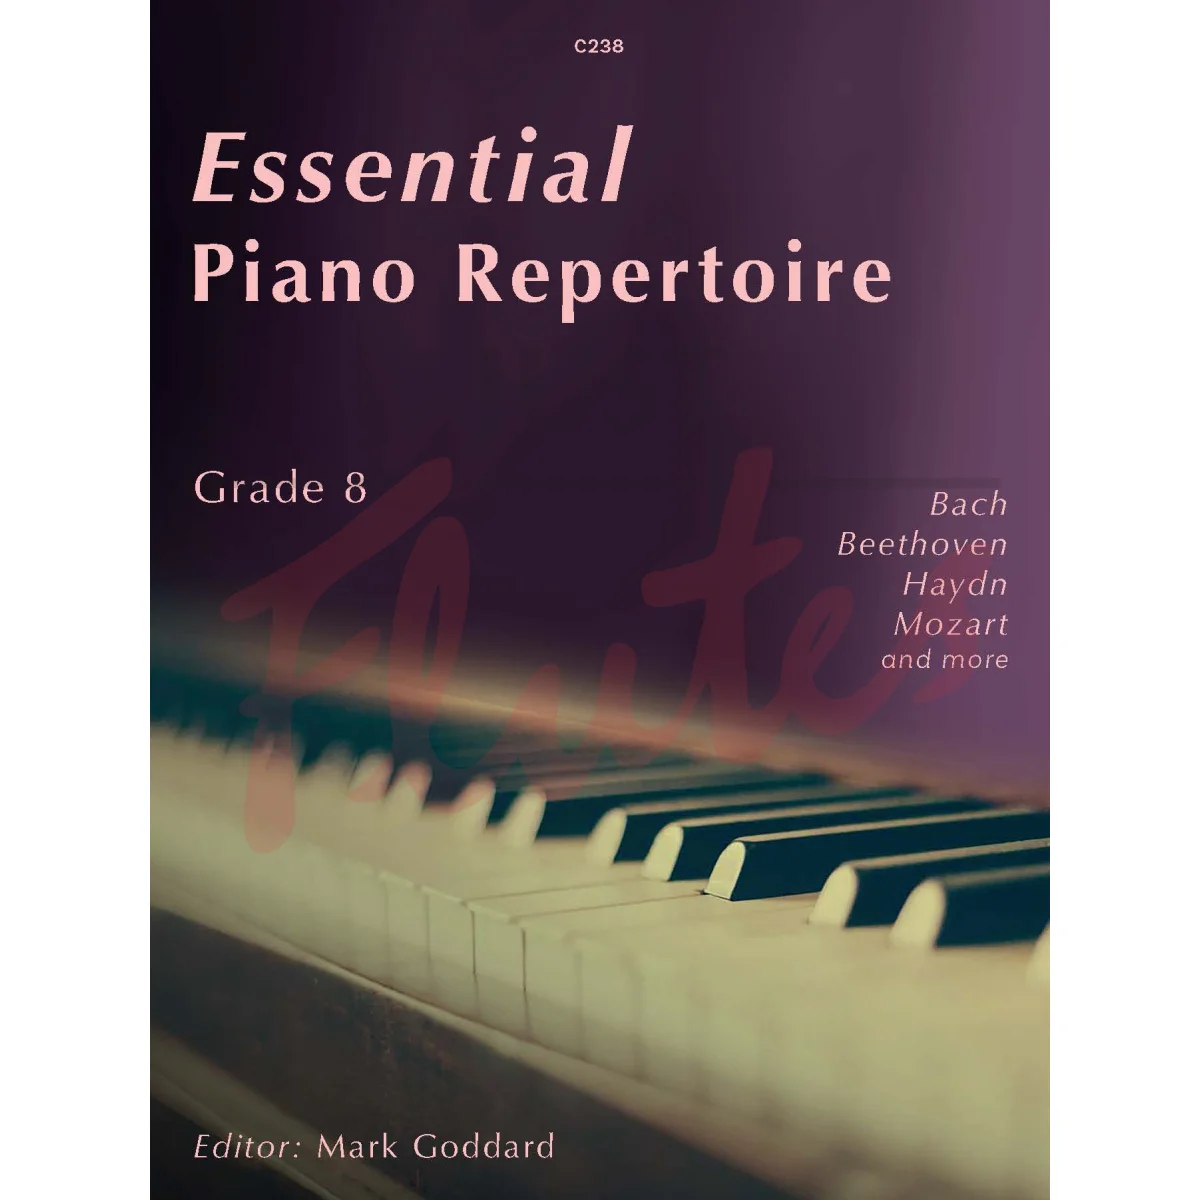 Essential Piano Repertoire: Grade 8